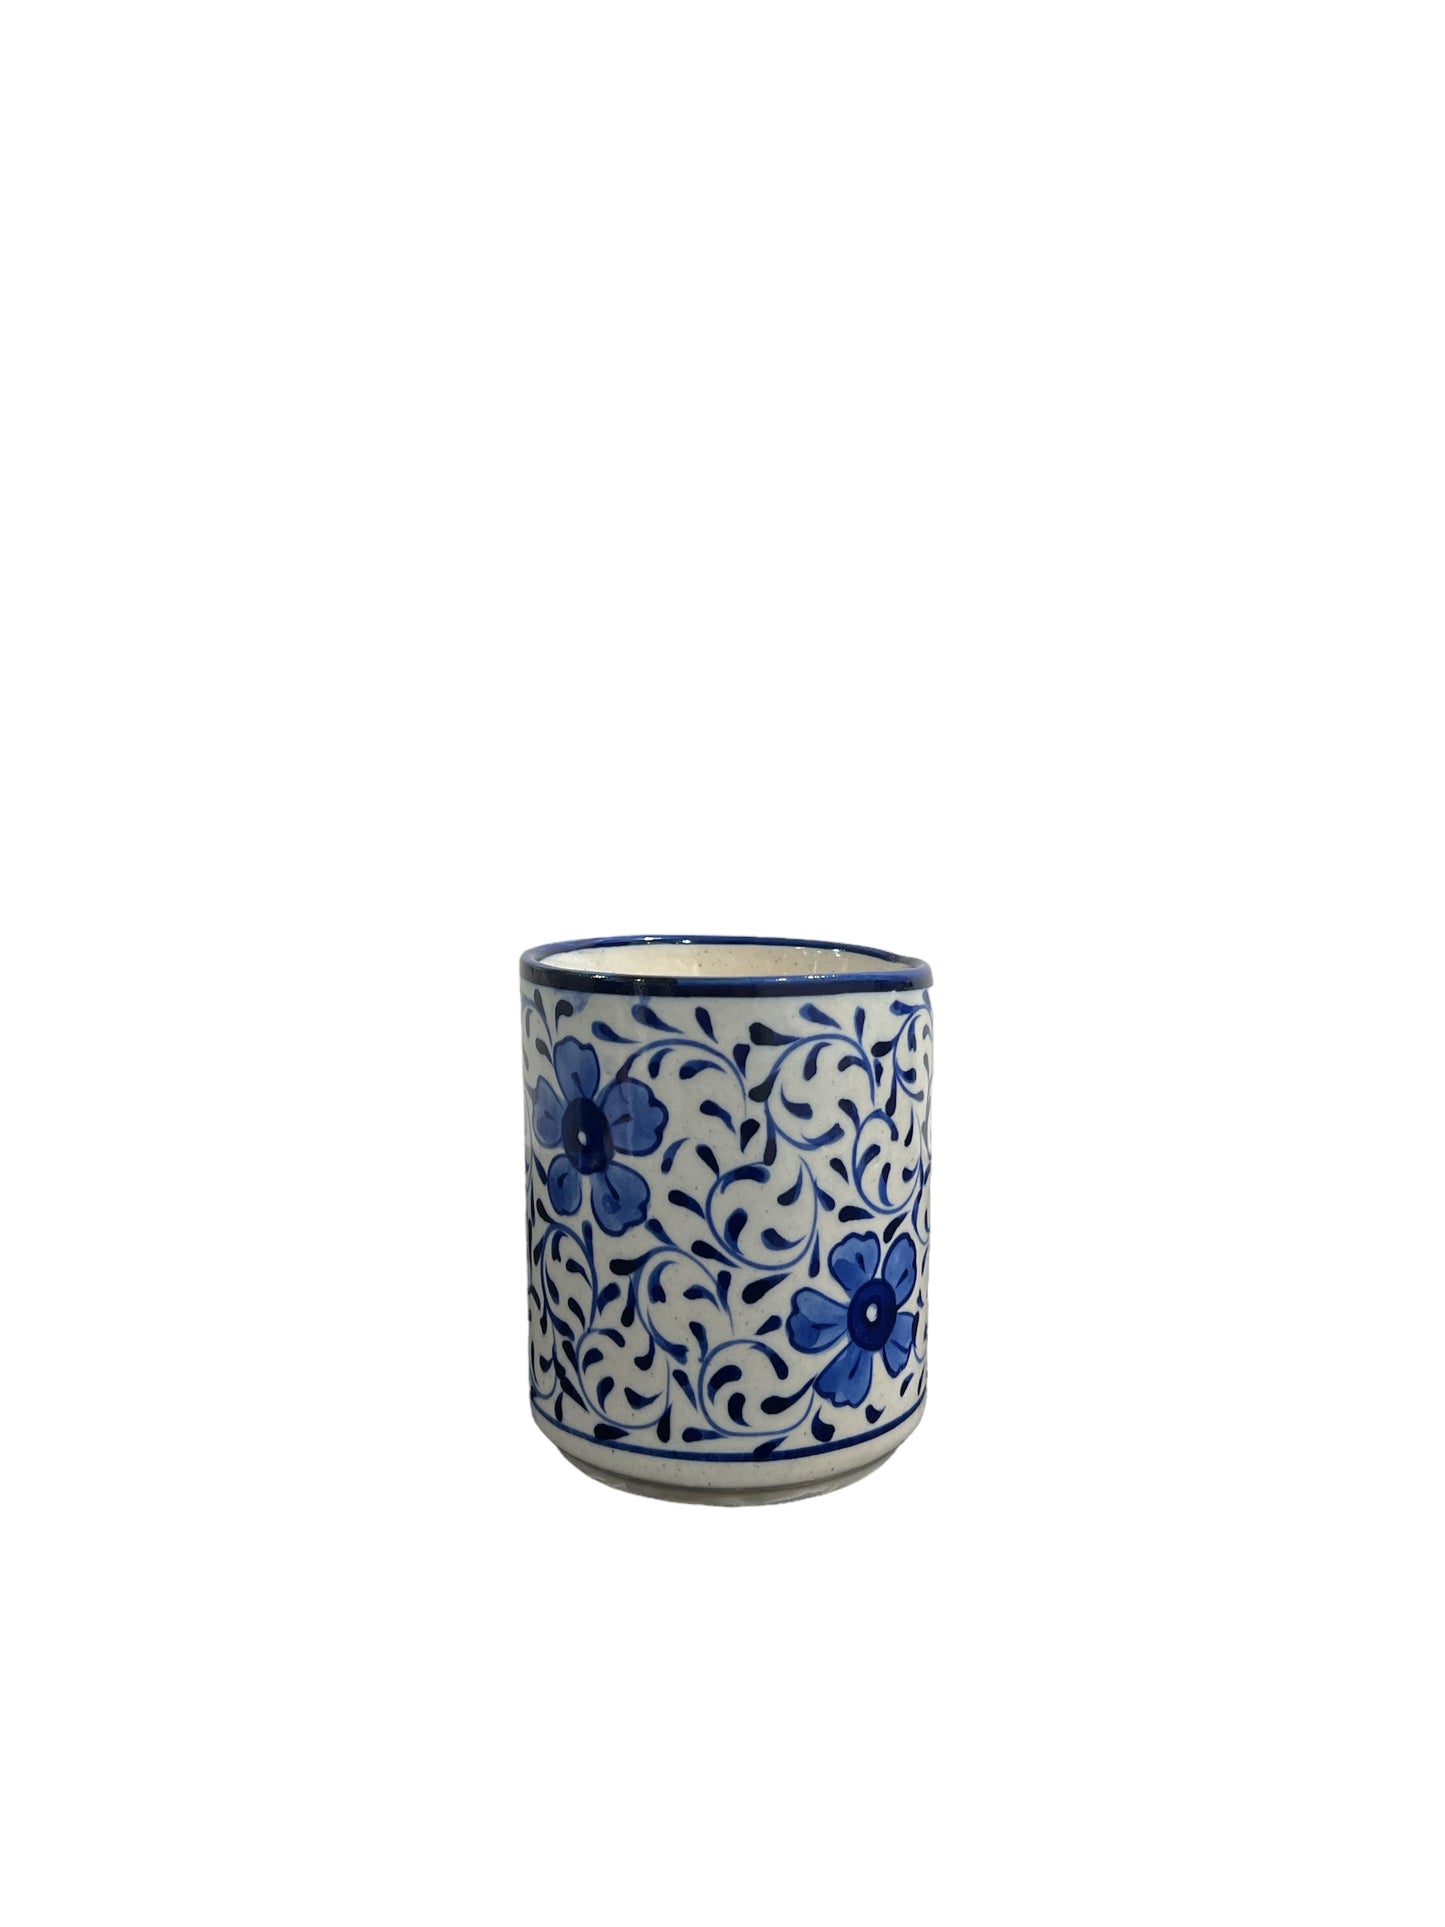 Blue Pottery Tea Coffee Mug - Blue Flowers and Vines Design (Set of 2)